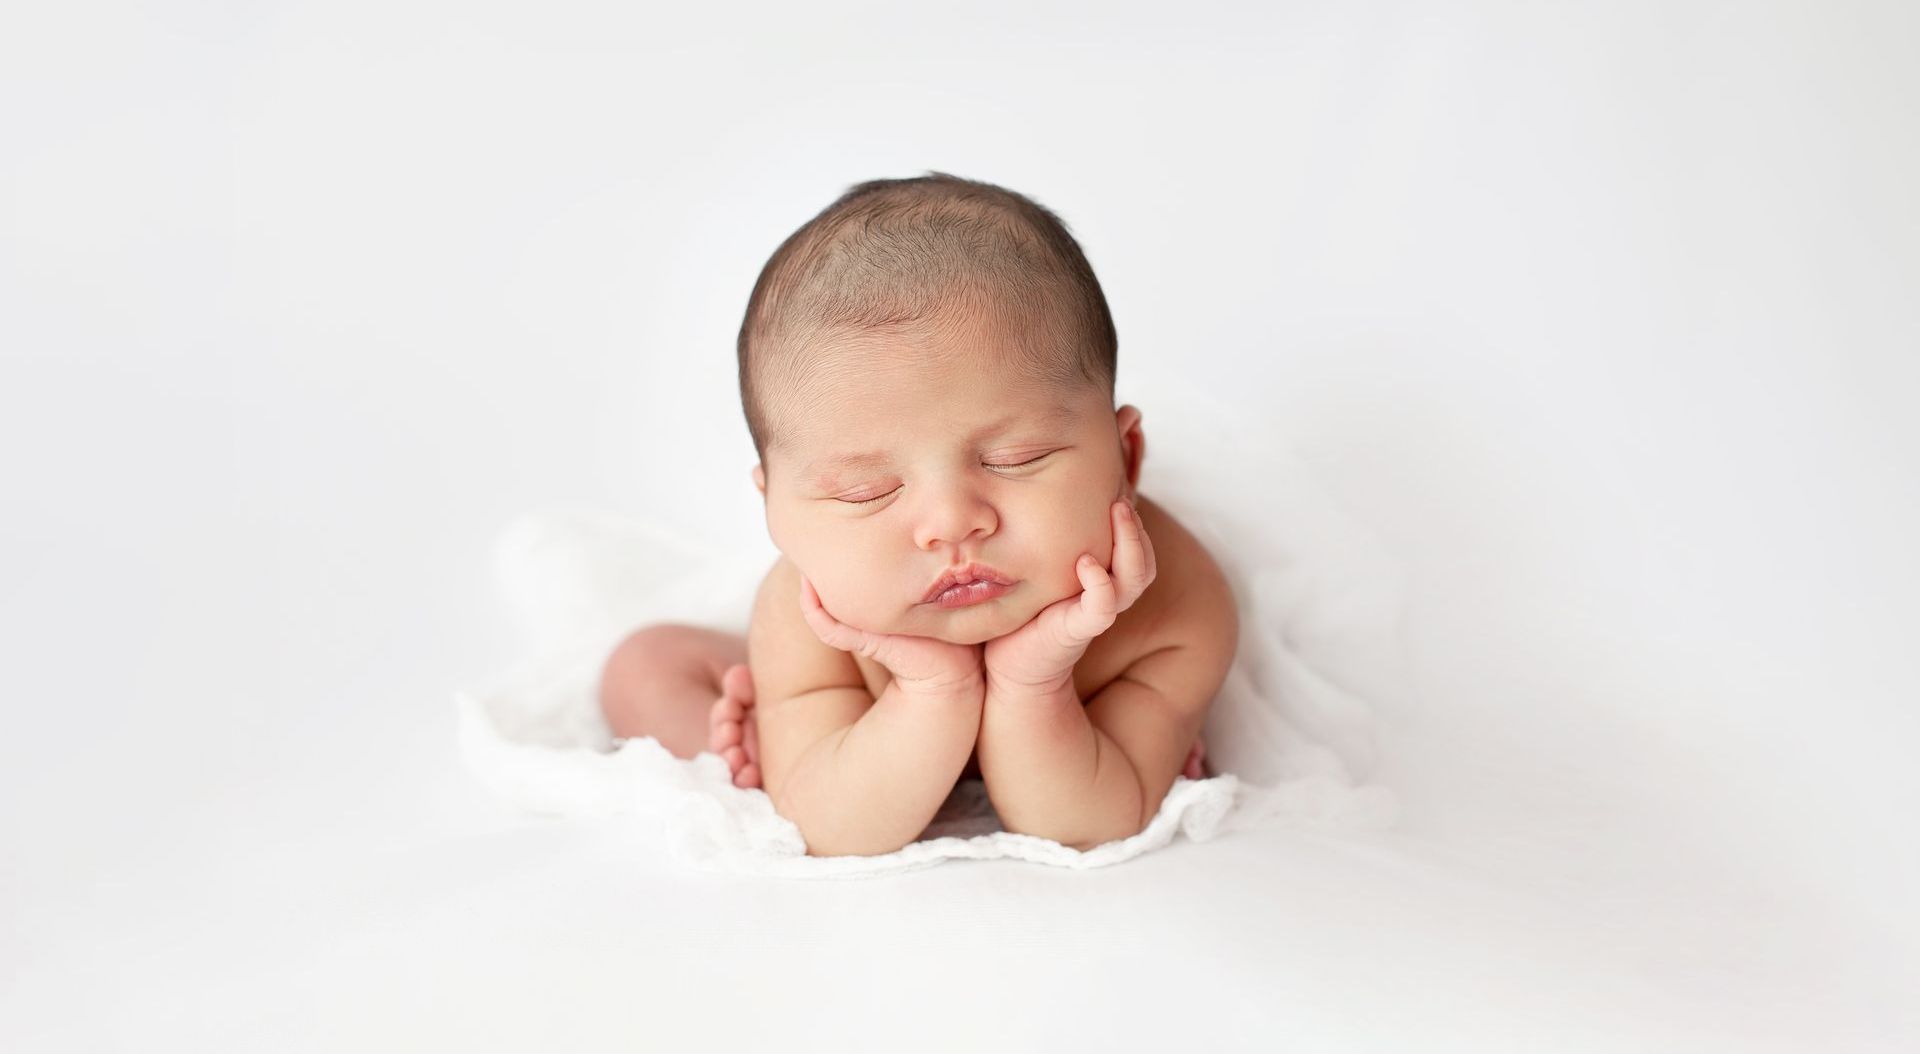 newborn baby photography studio lowestoft suffolk oulton broad norwich loddon beccles